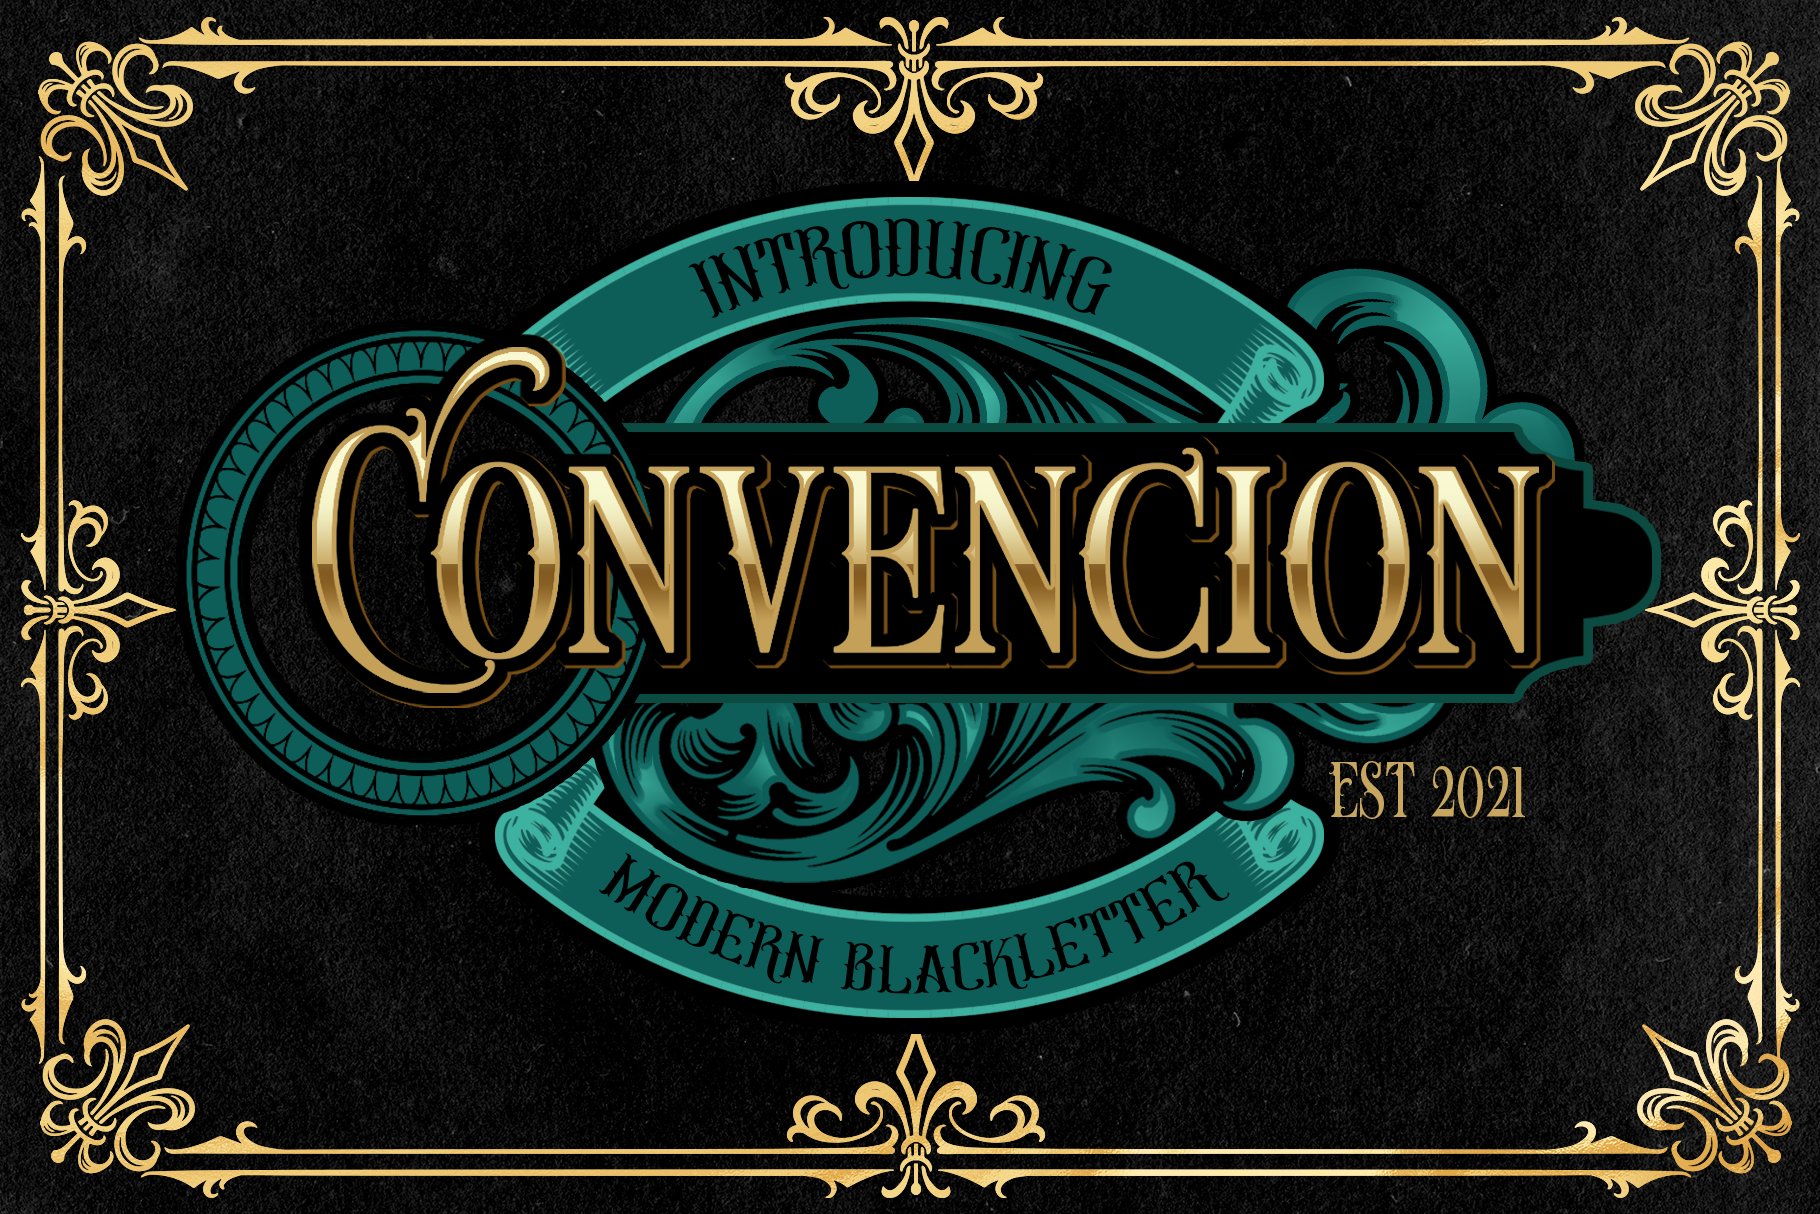 CONVENCION cover image.